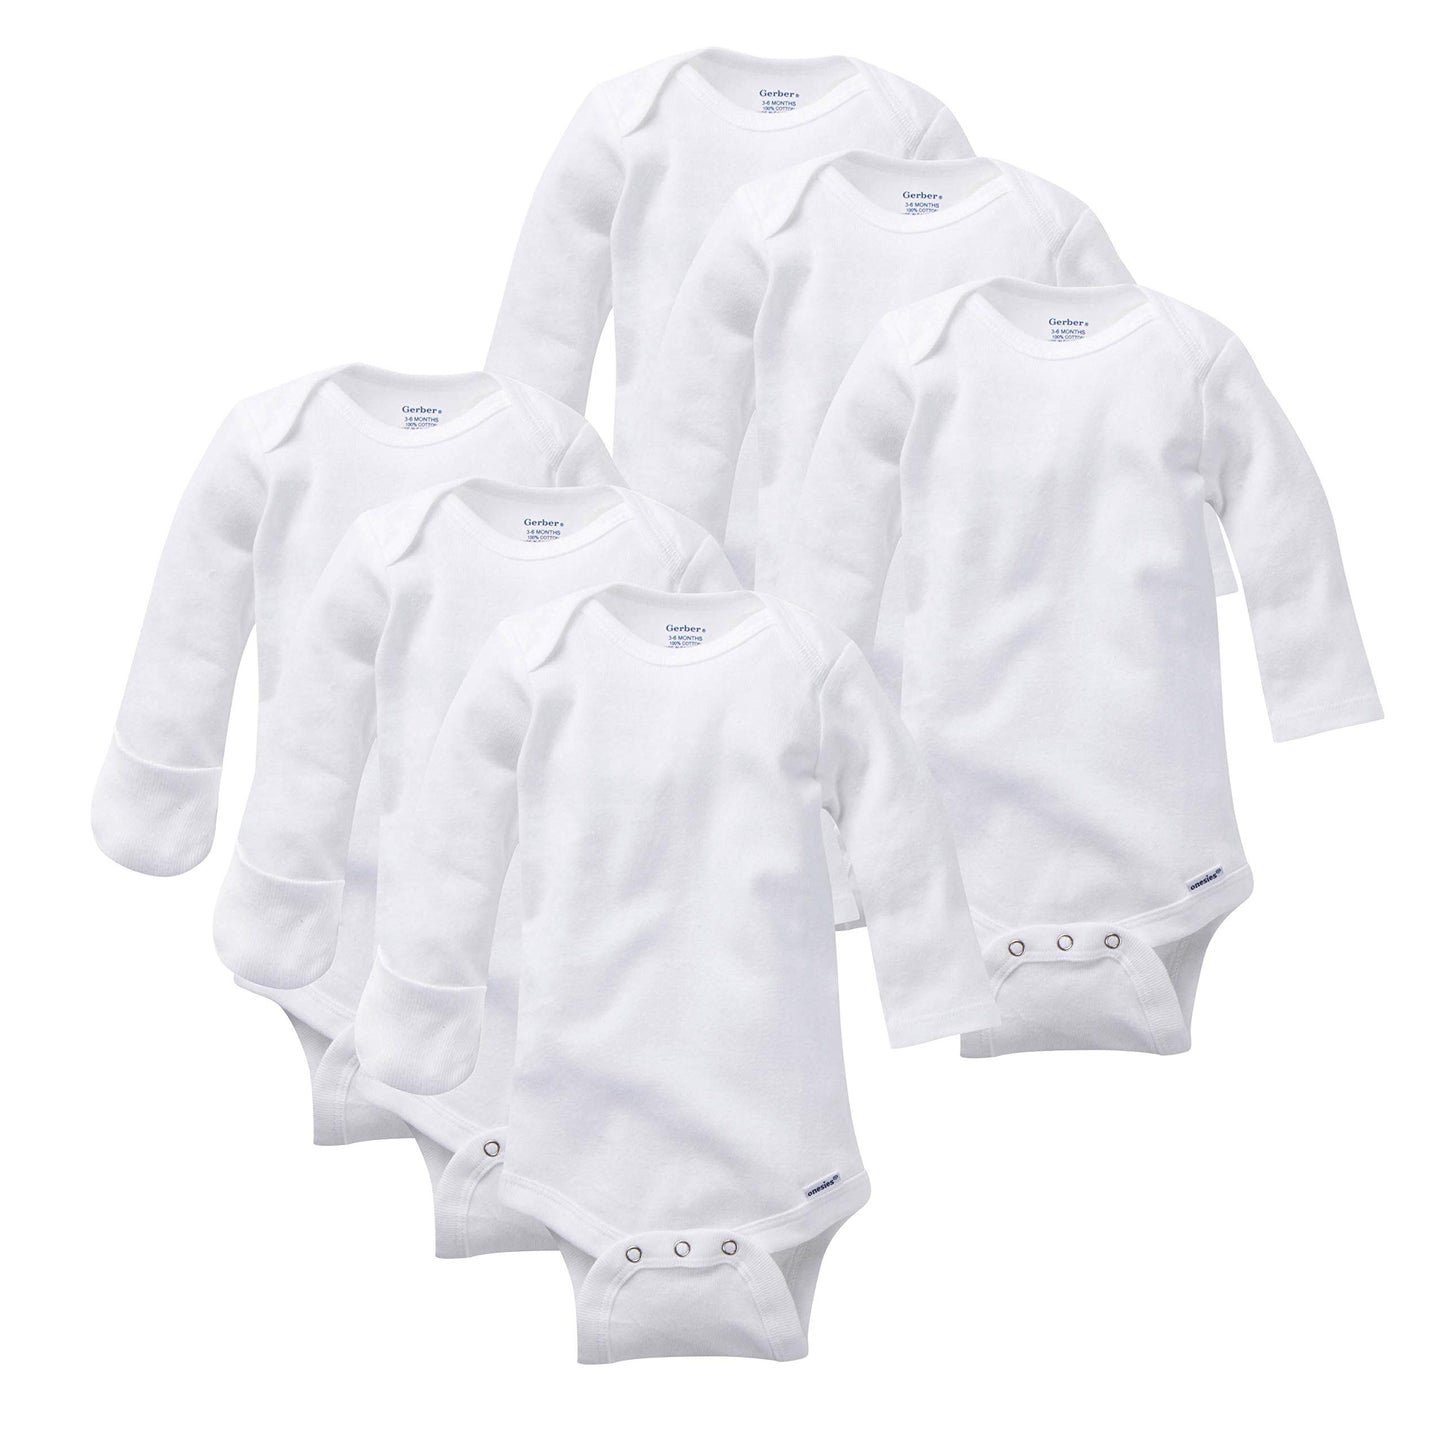 Baby - Gerber unisex-baby Multi-pack Long-sleeve Onesies Bodysuit Mitten Cuff Sizes